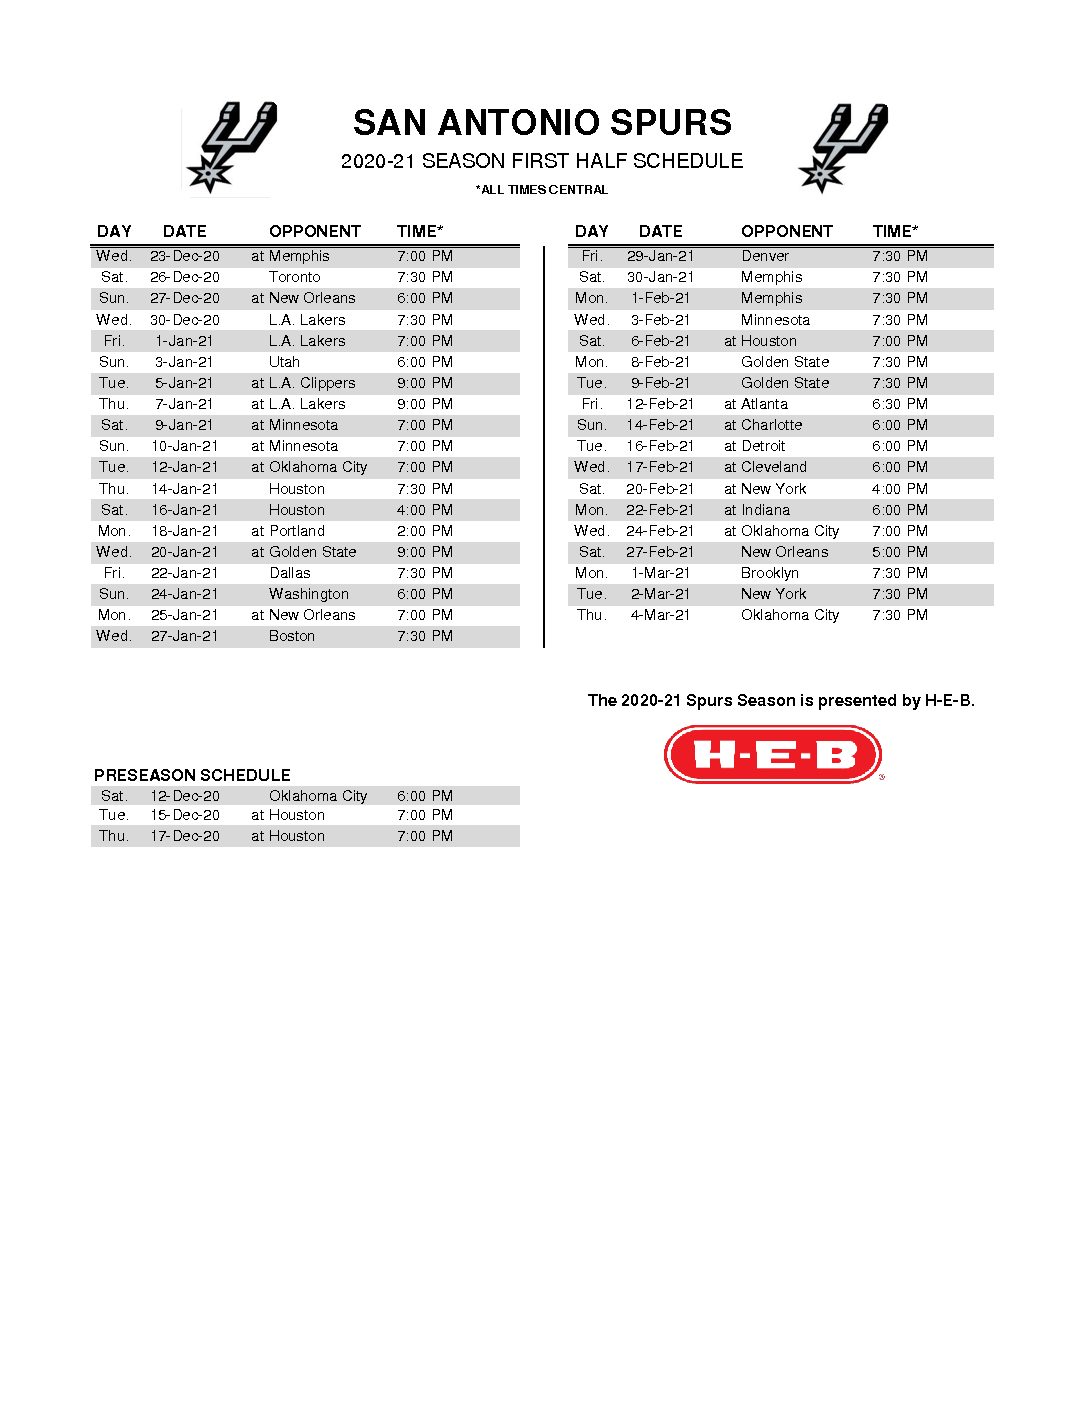 Printable Los Angeles Lakers schedule, TV schedule for 2020-21 season  (updated for 2nd half) - Interbasket